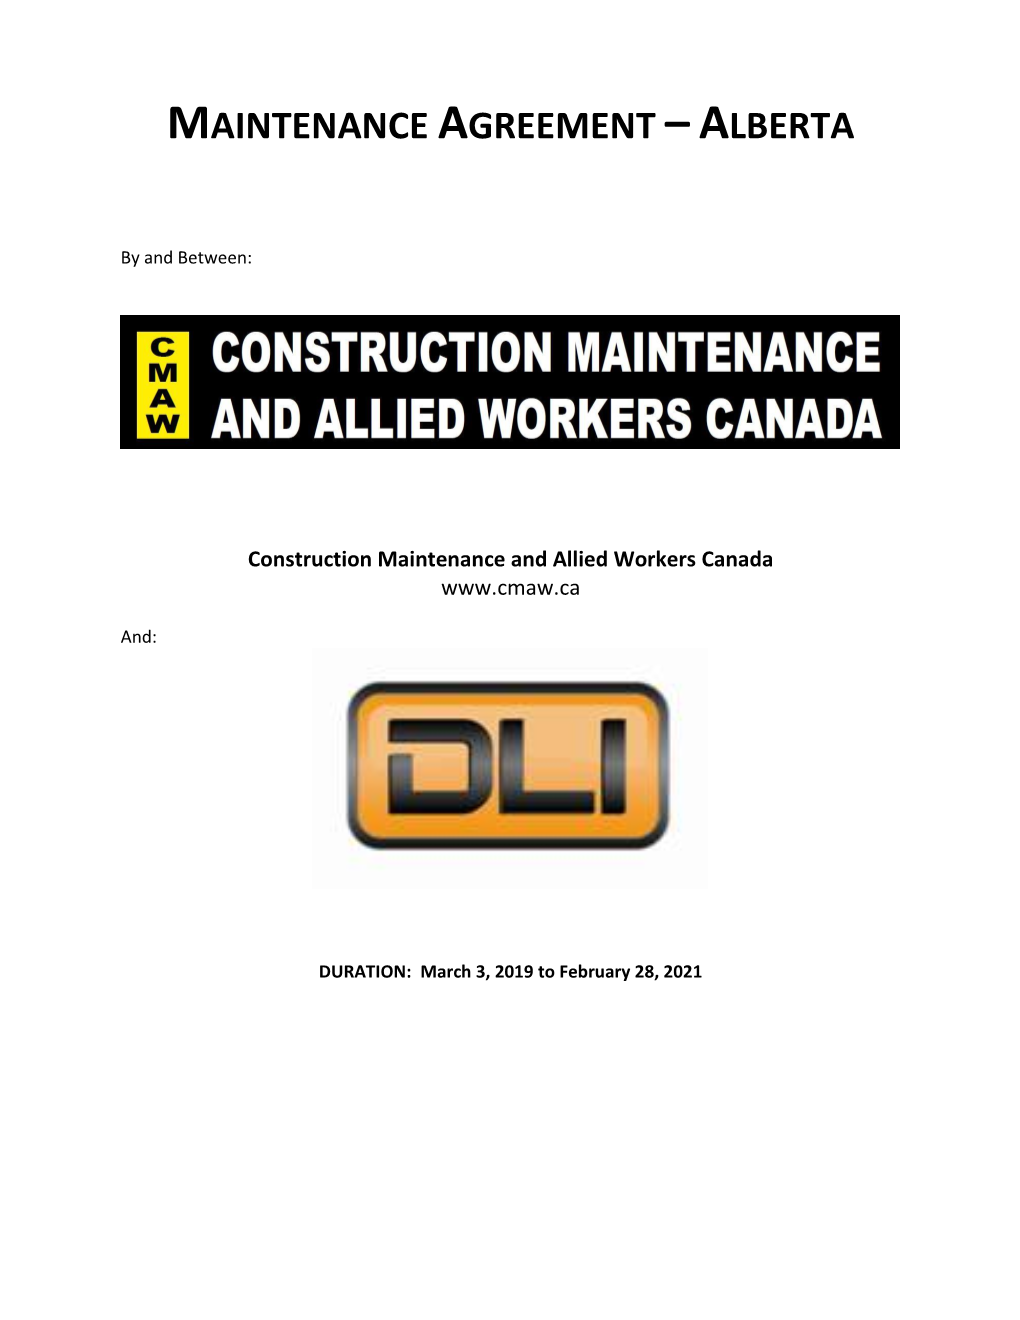 Maintenance Agreement –Alberta